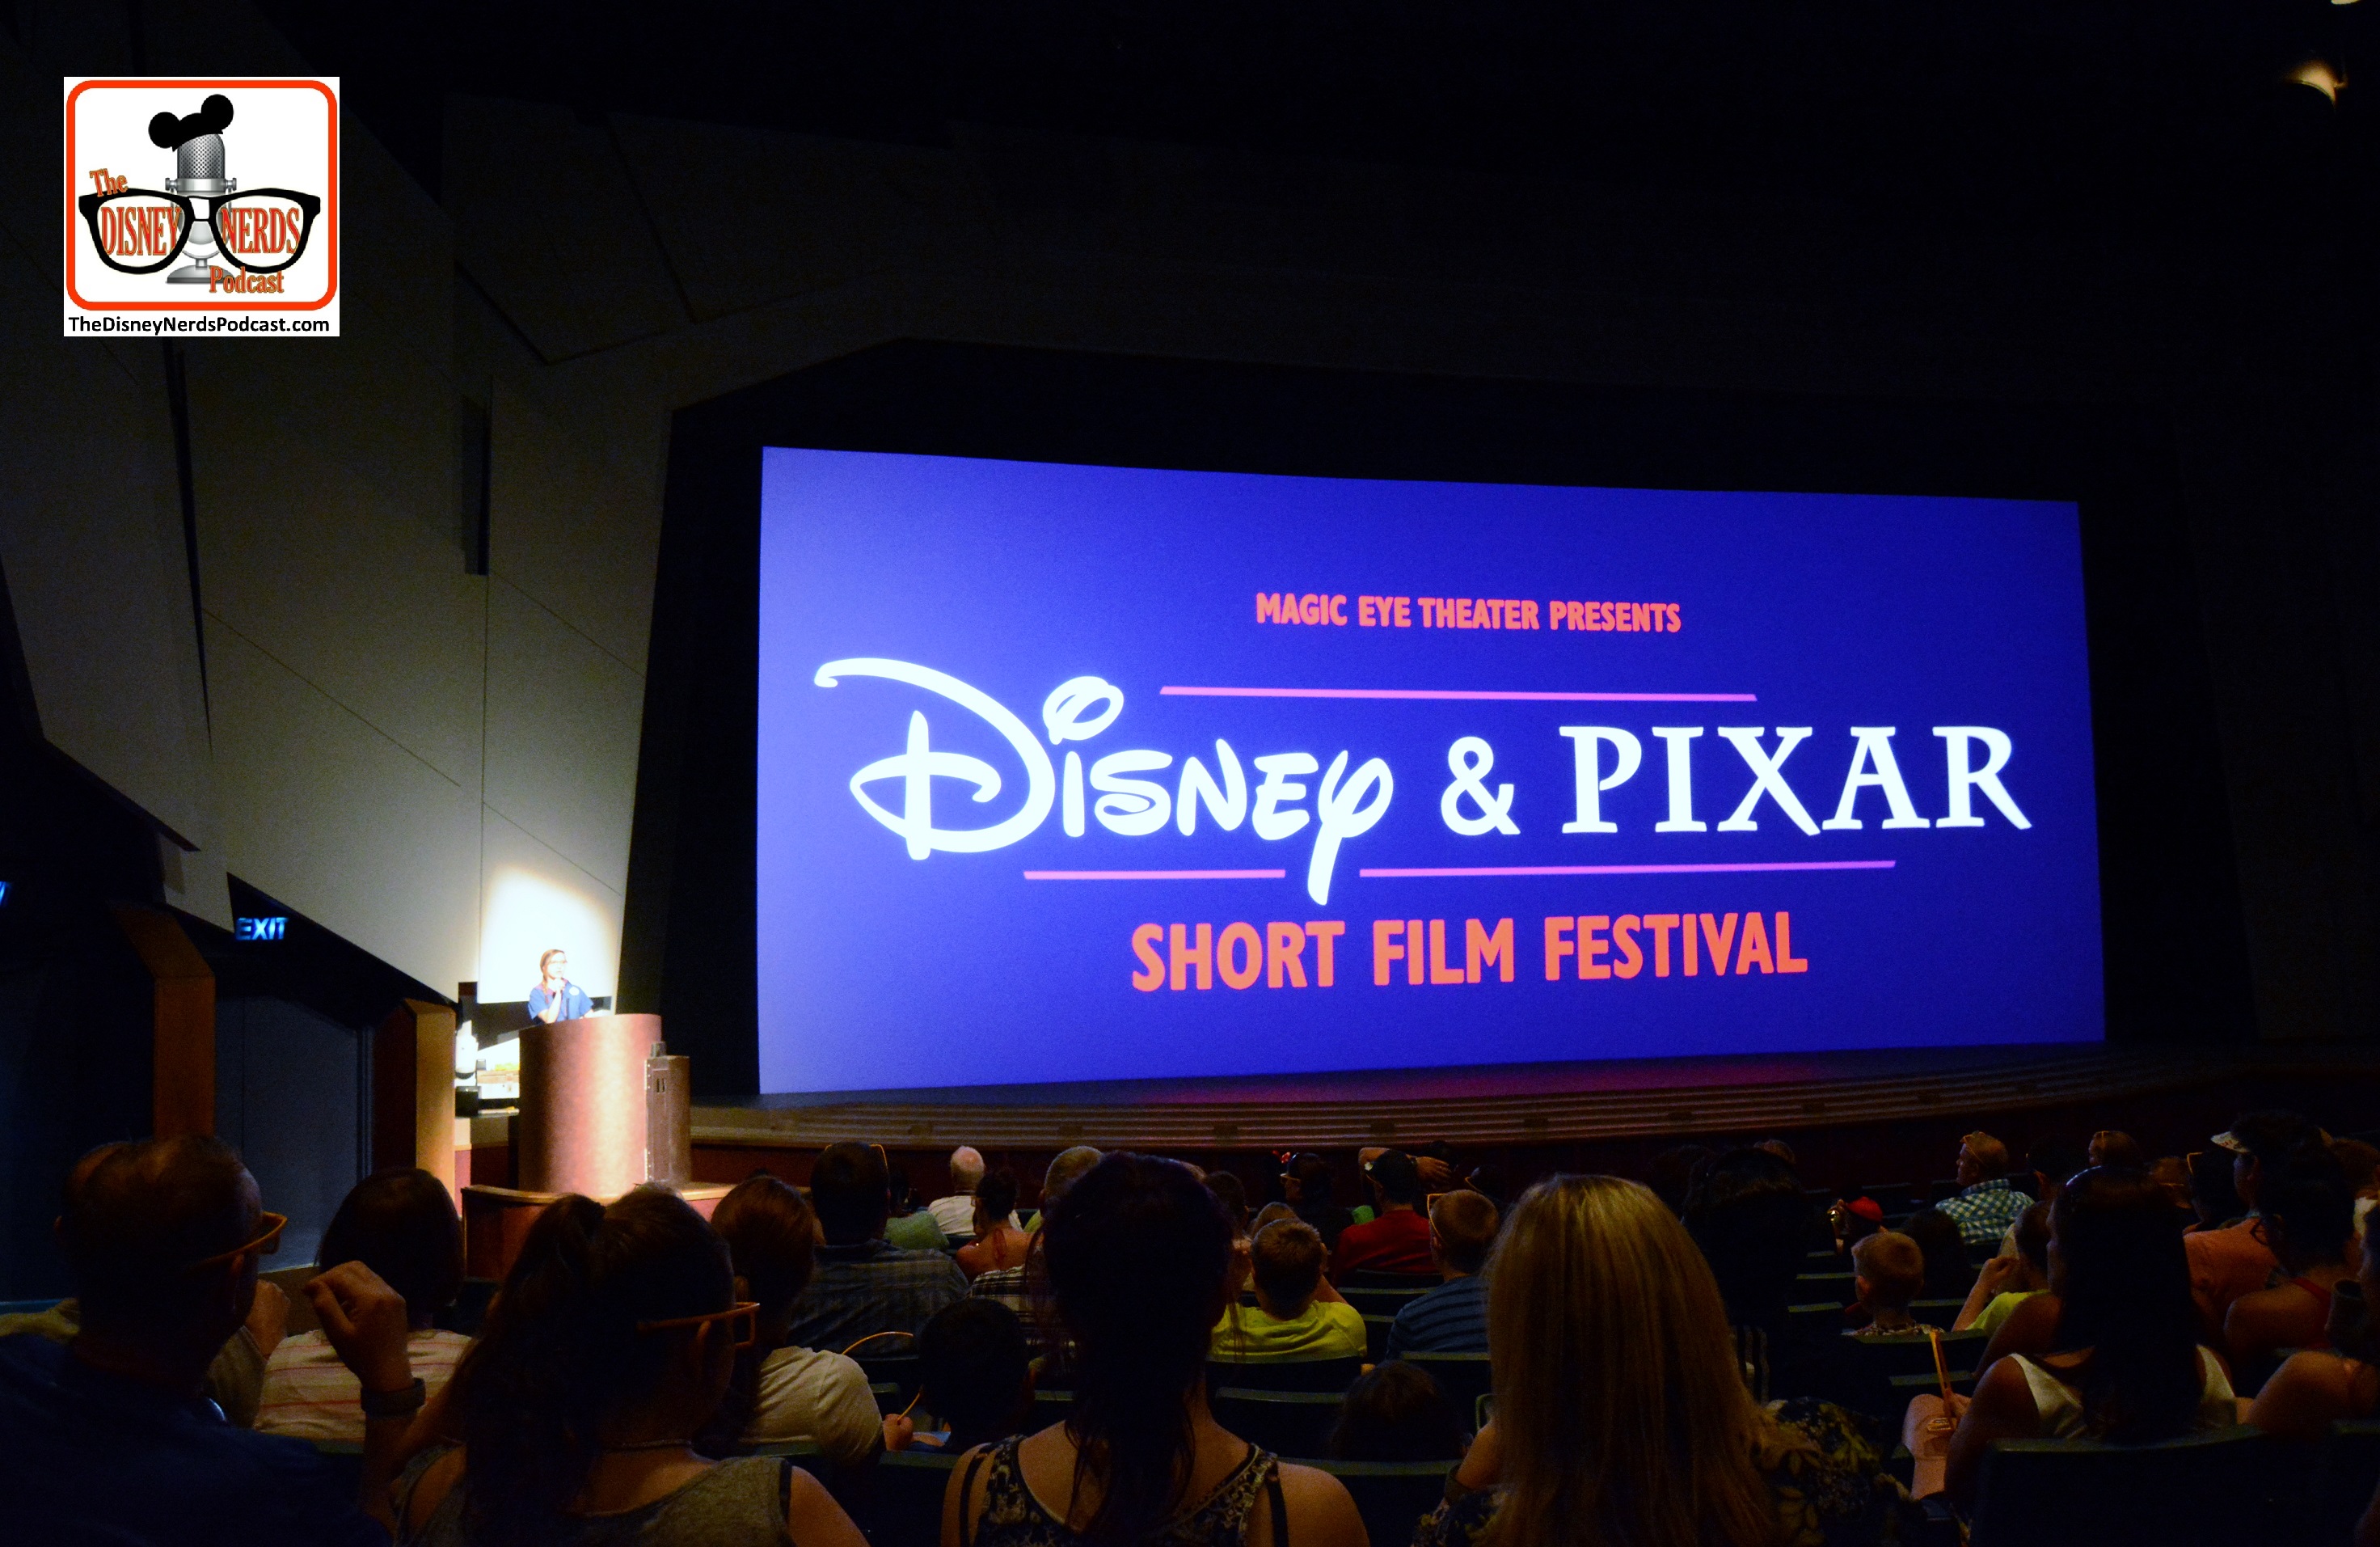 DNP April 2016 Photo Report: Epcot Magic Eye Theater Disney & Pixar Short Film Festival